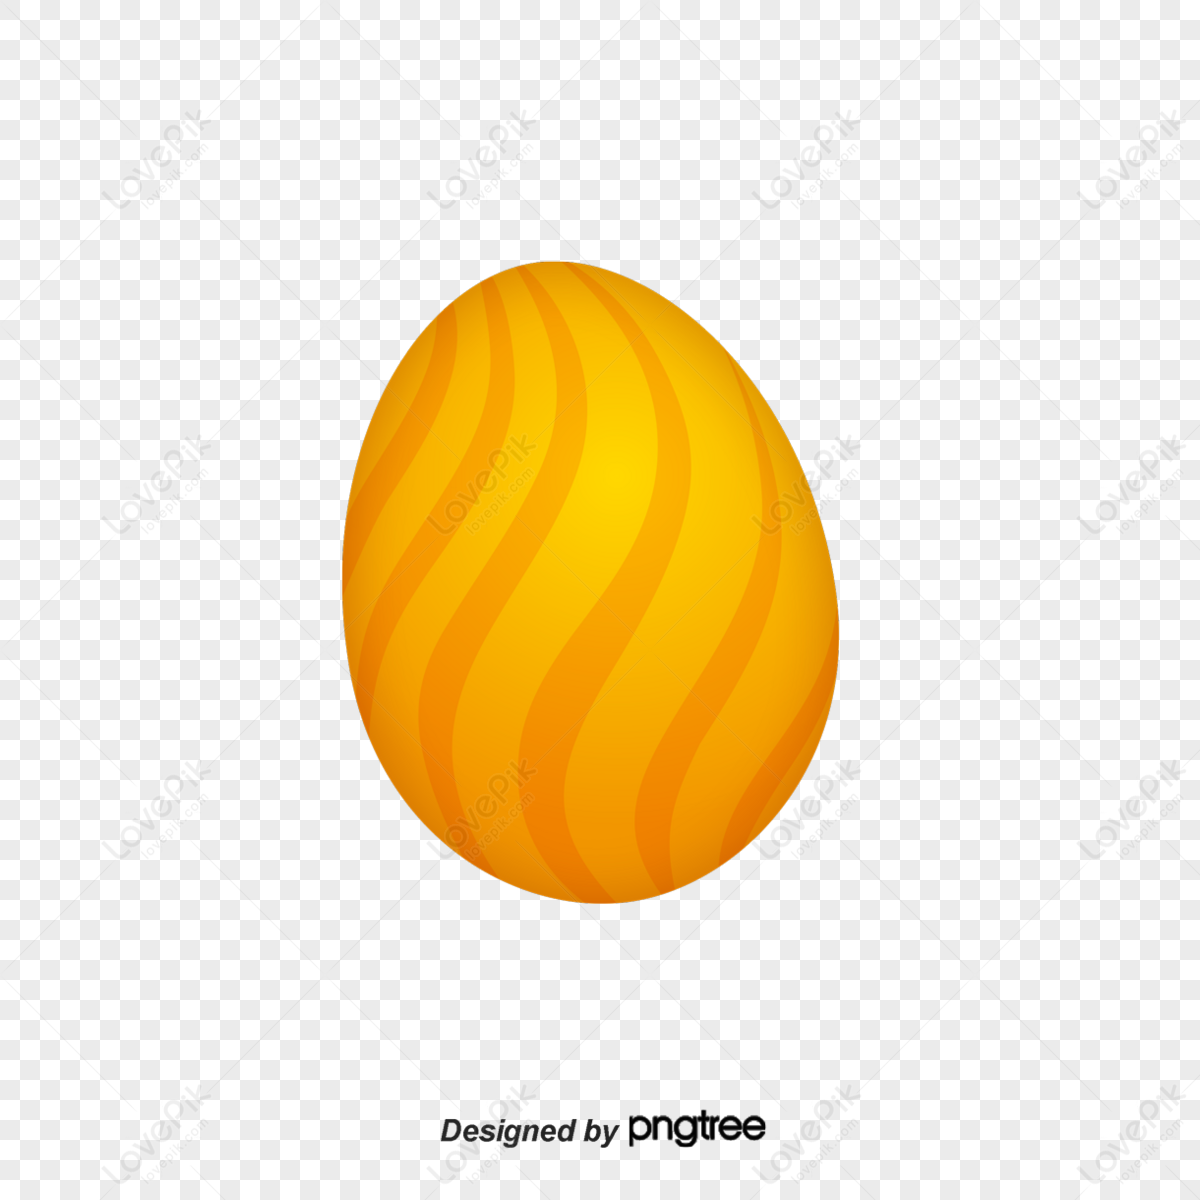 Egg Shape PNG Images With Transparent Background | Free Download On Lovepik